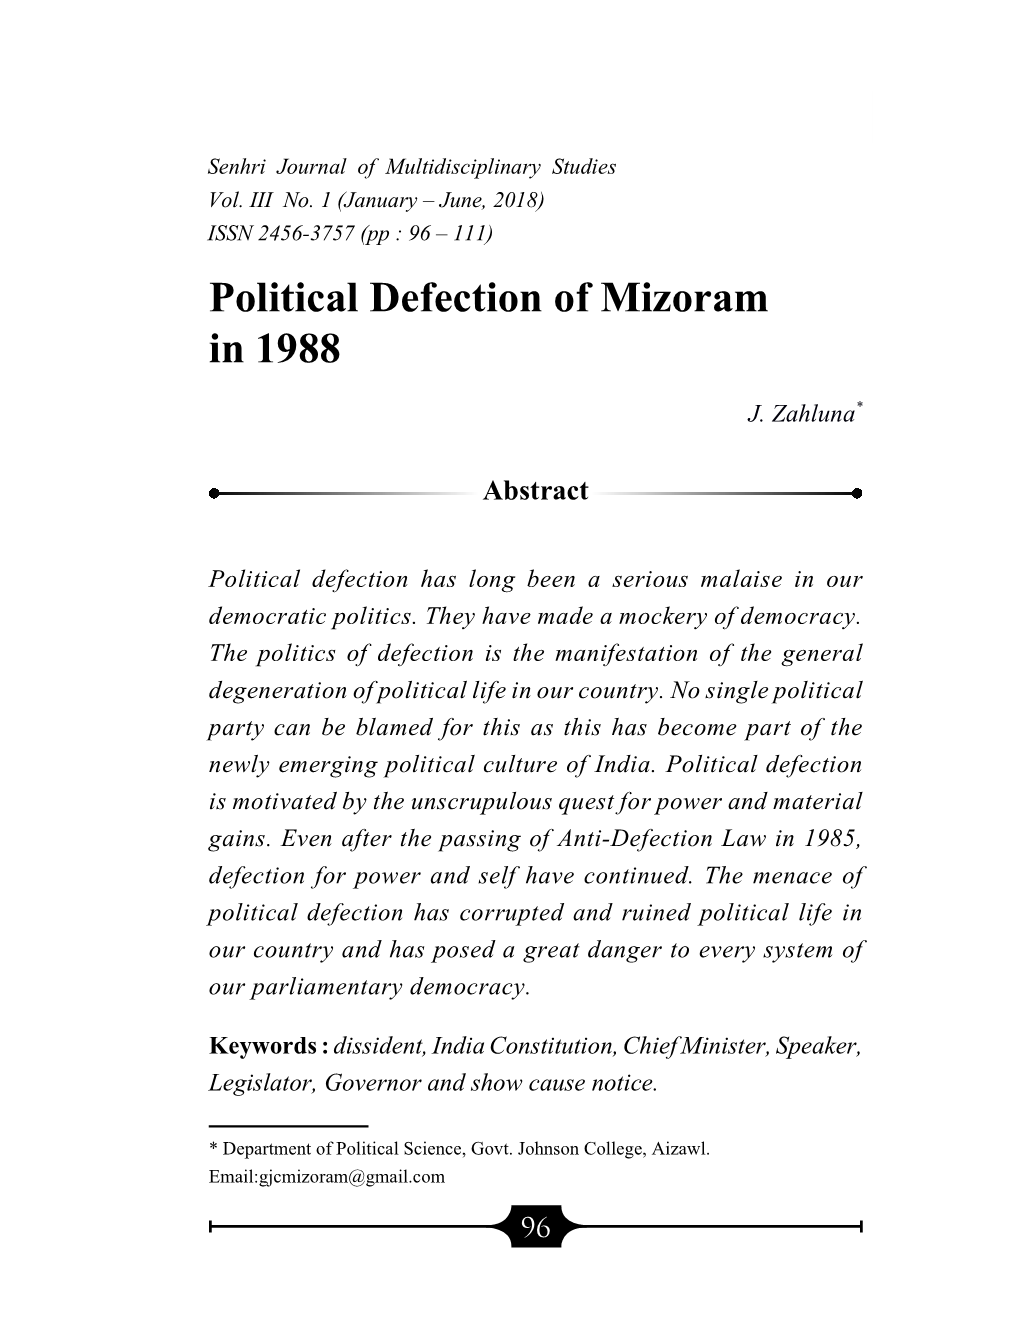 Political Defection of Mizoram in 1988 J